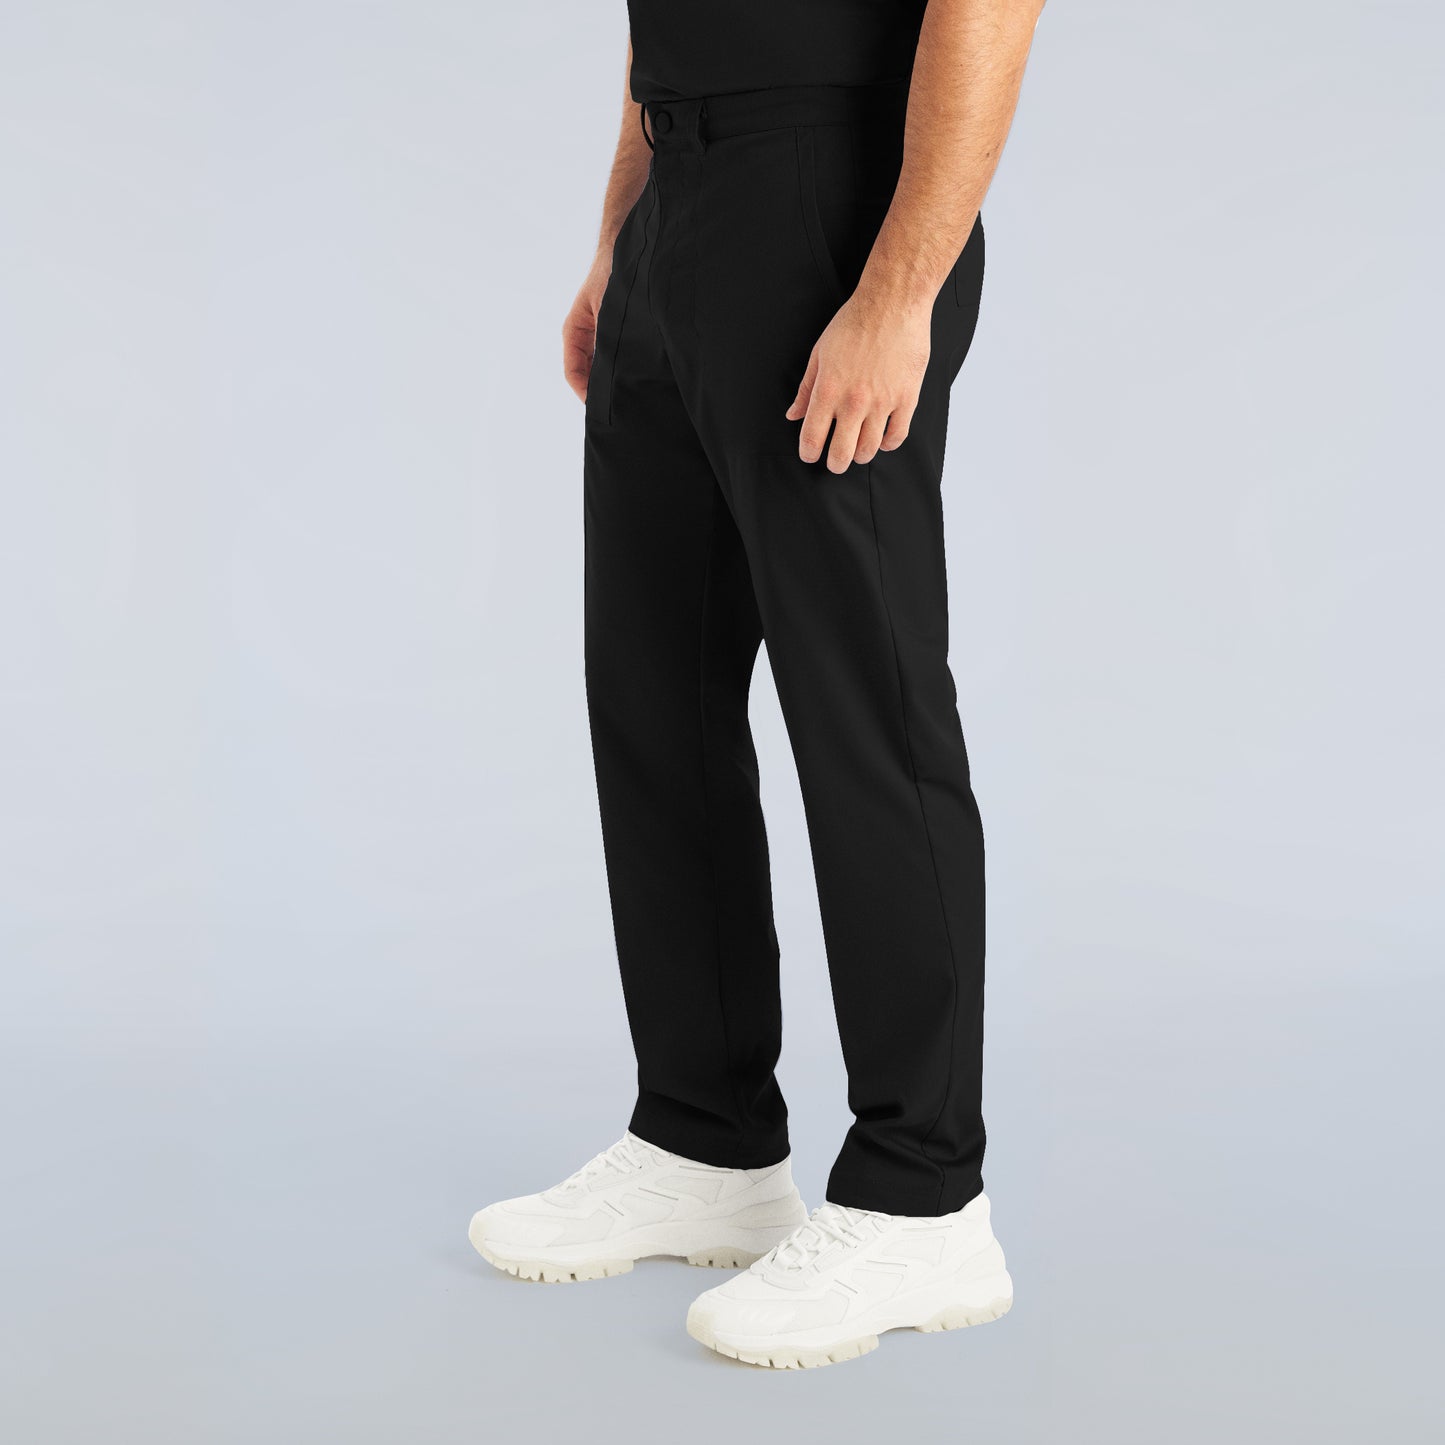 Men's straight pants - PROFLEX - 408